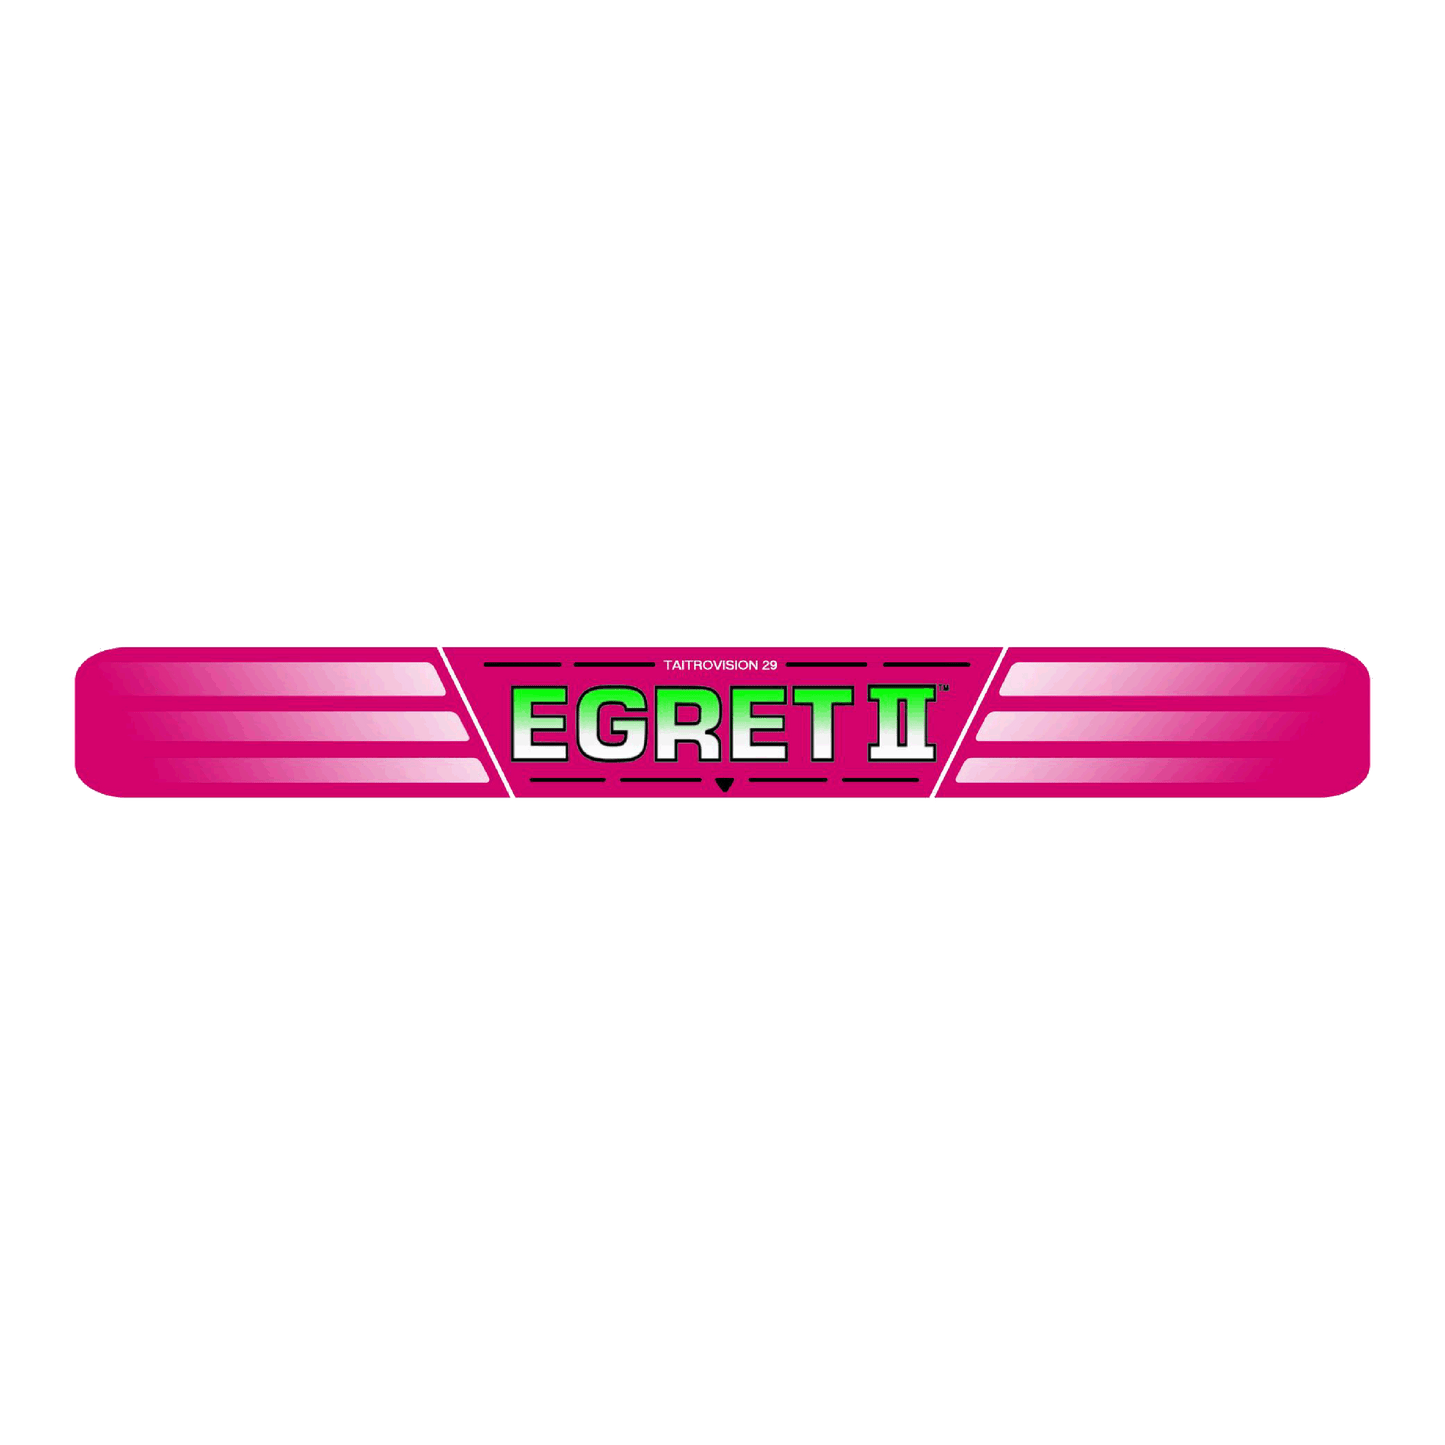 Egret II Illumination Panel - Pre-Order